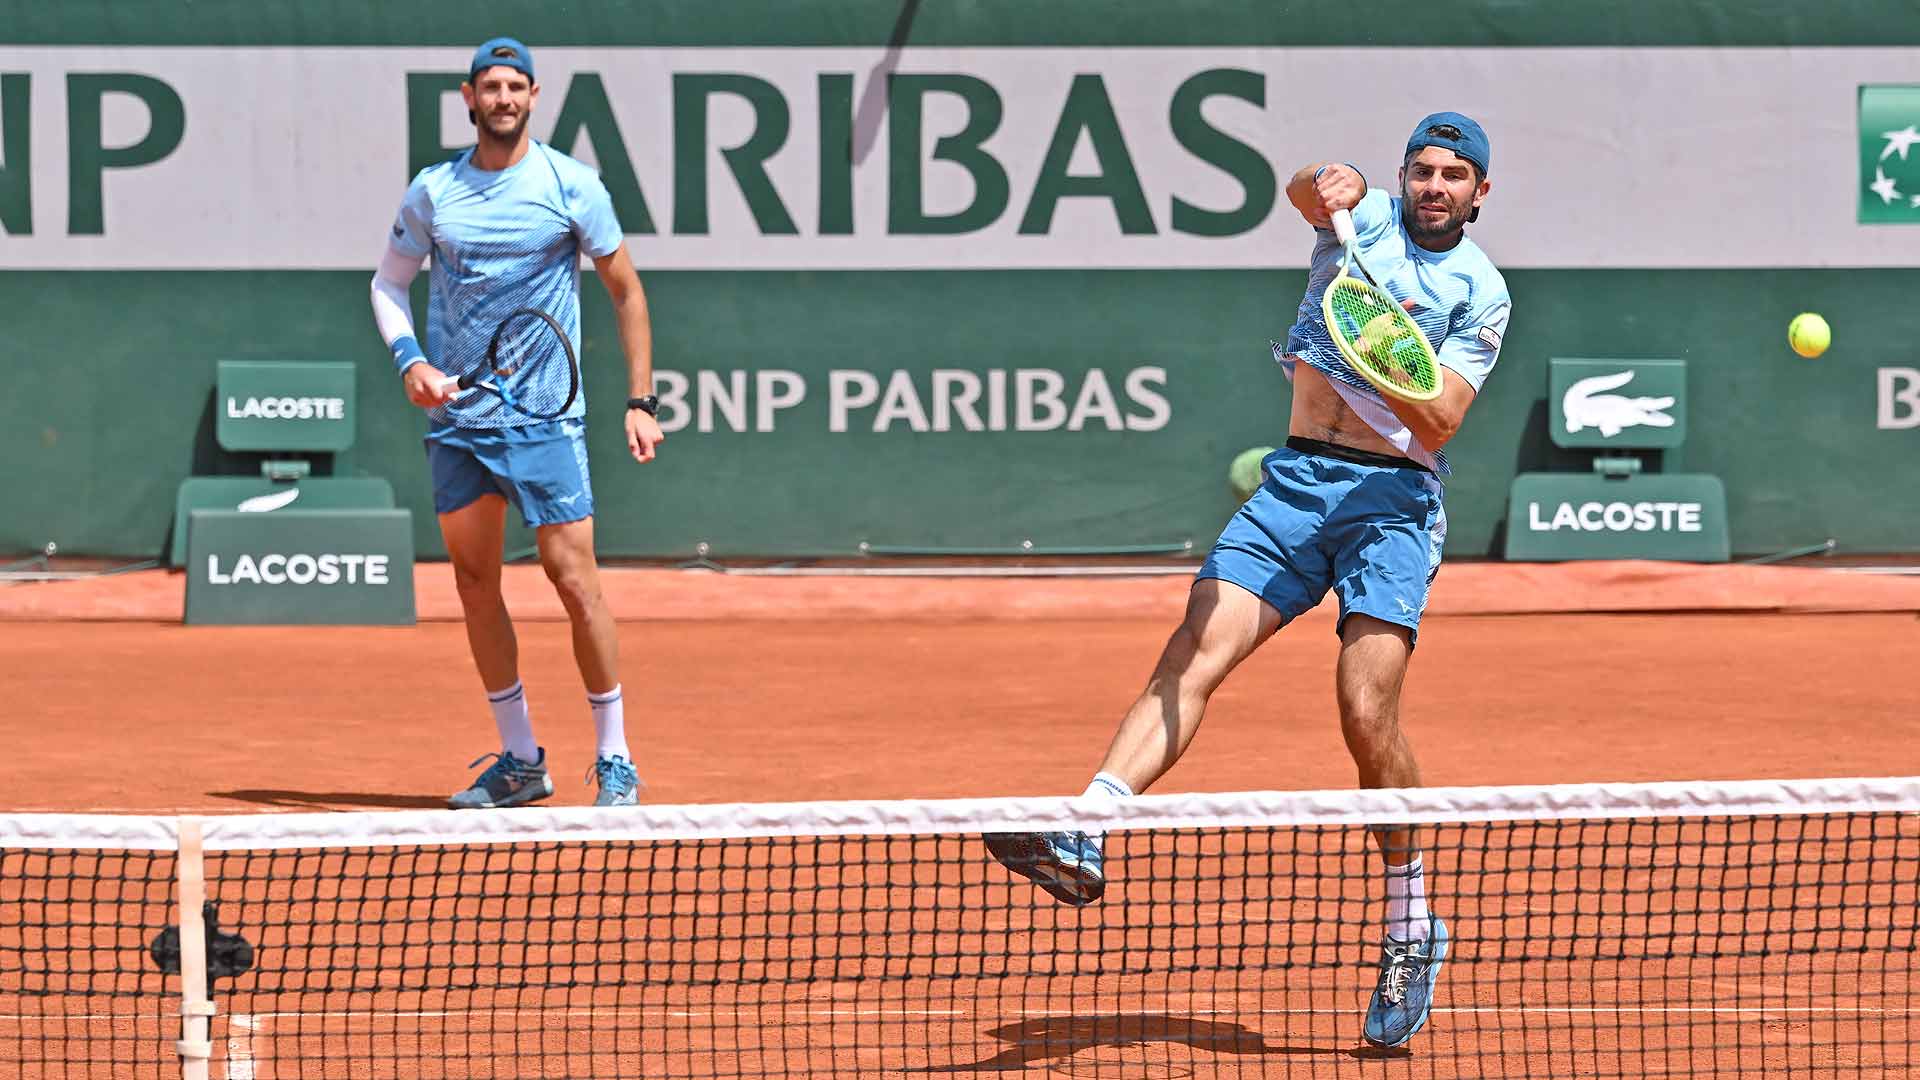 Bolelli/Vavassori reach Roland Garros final